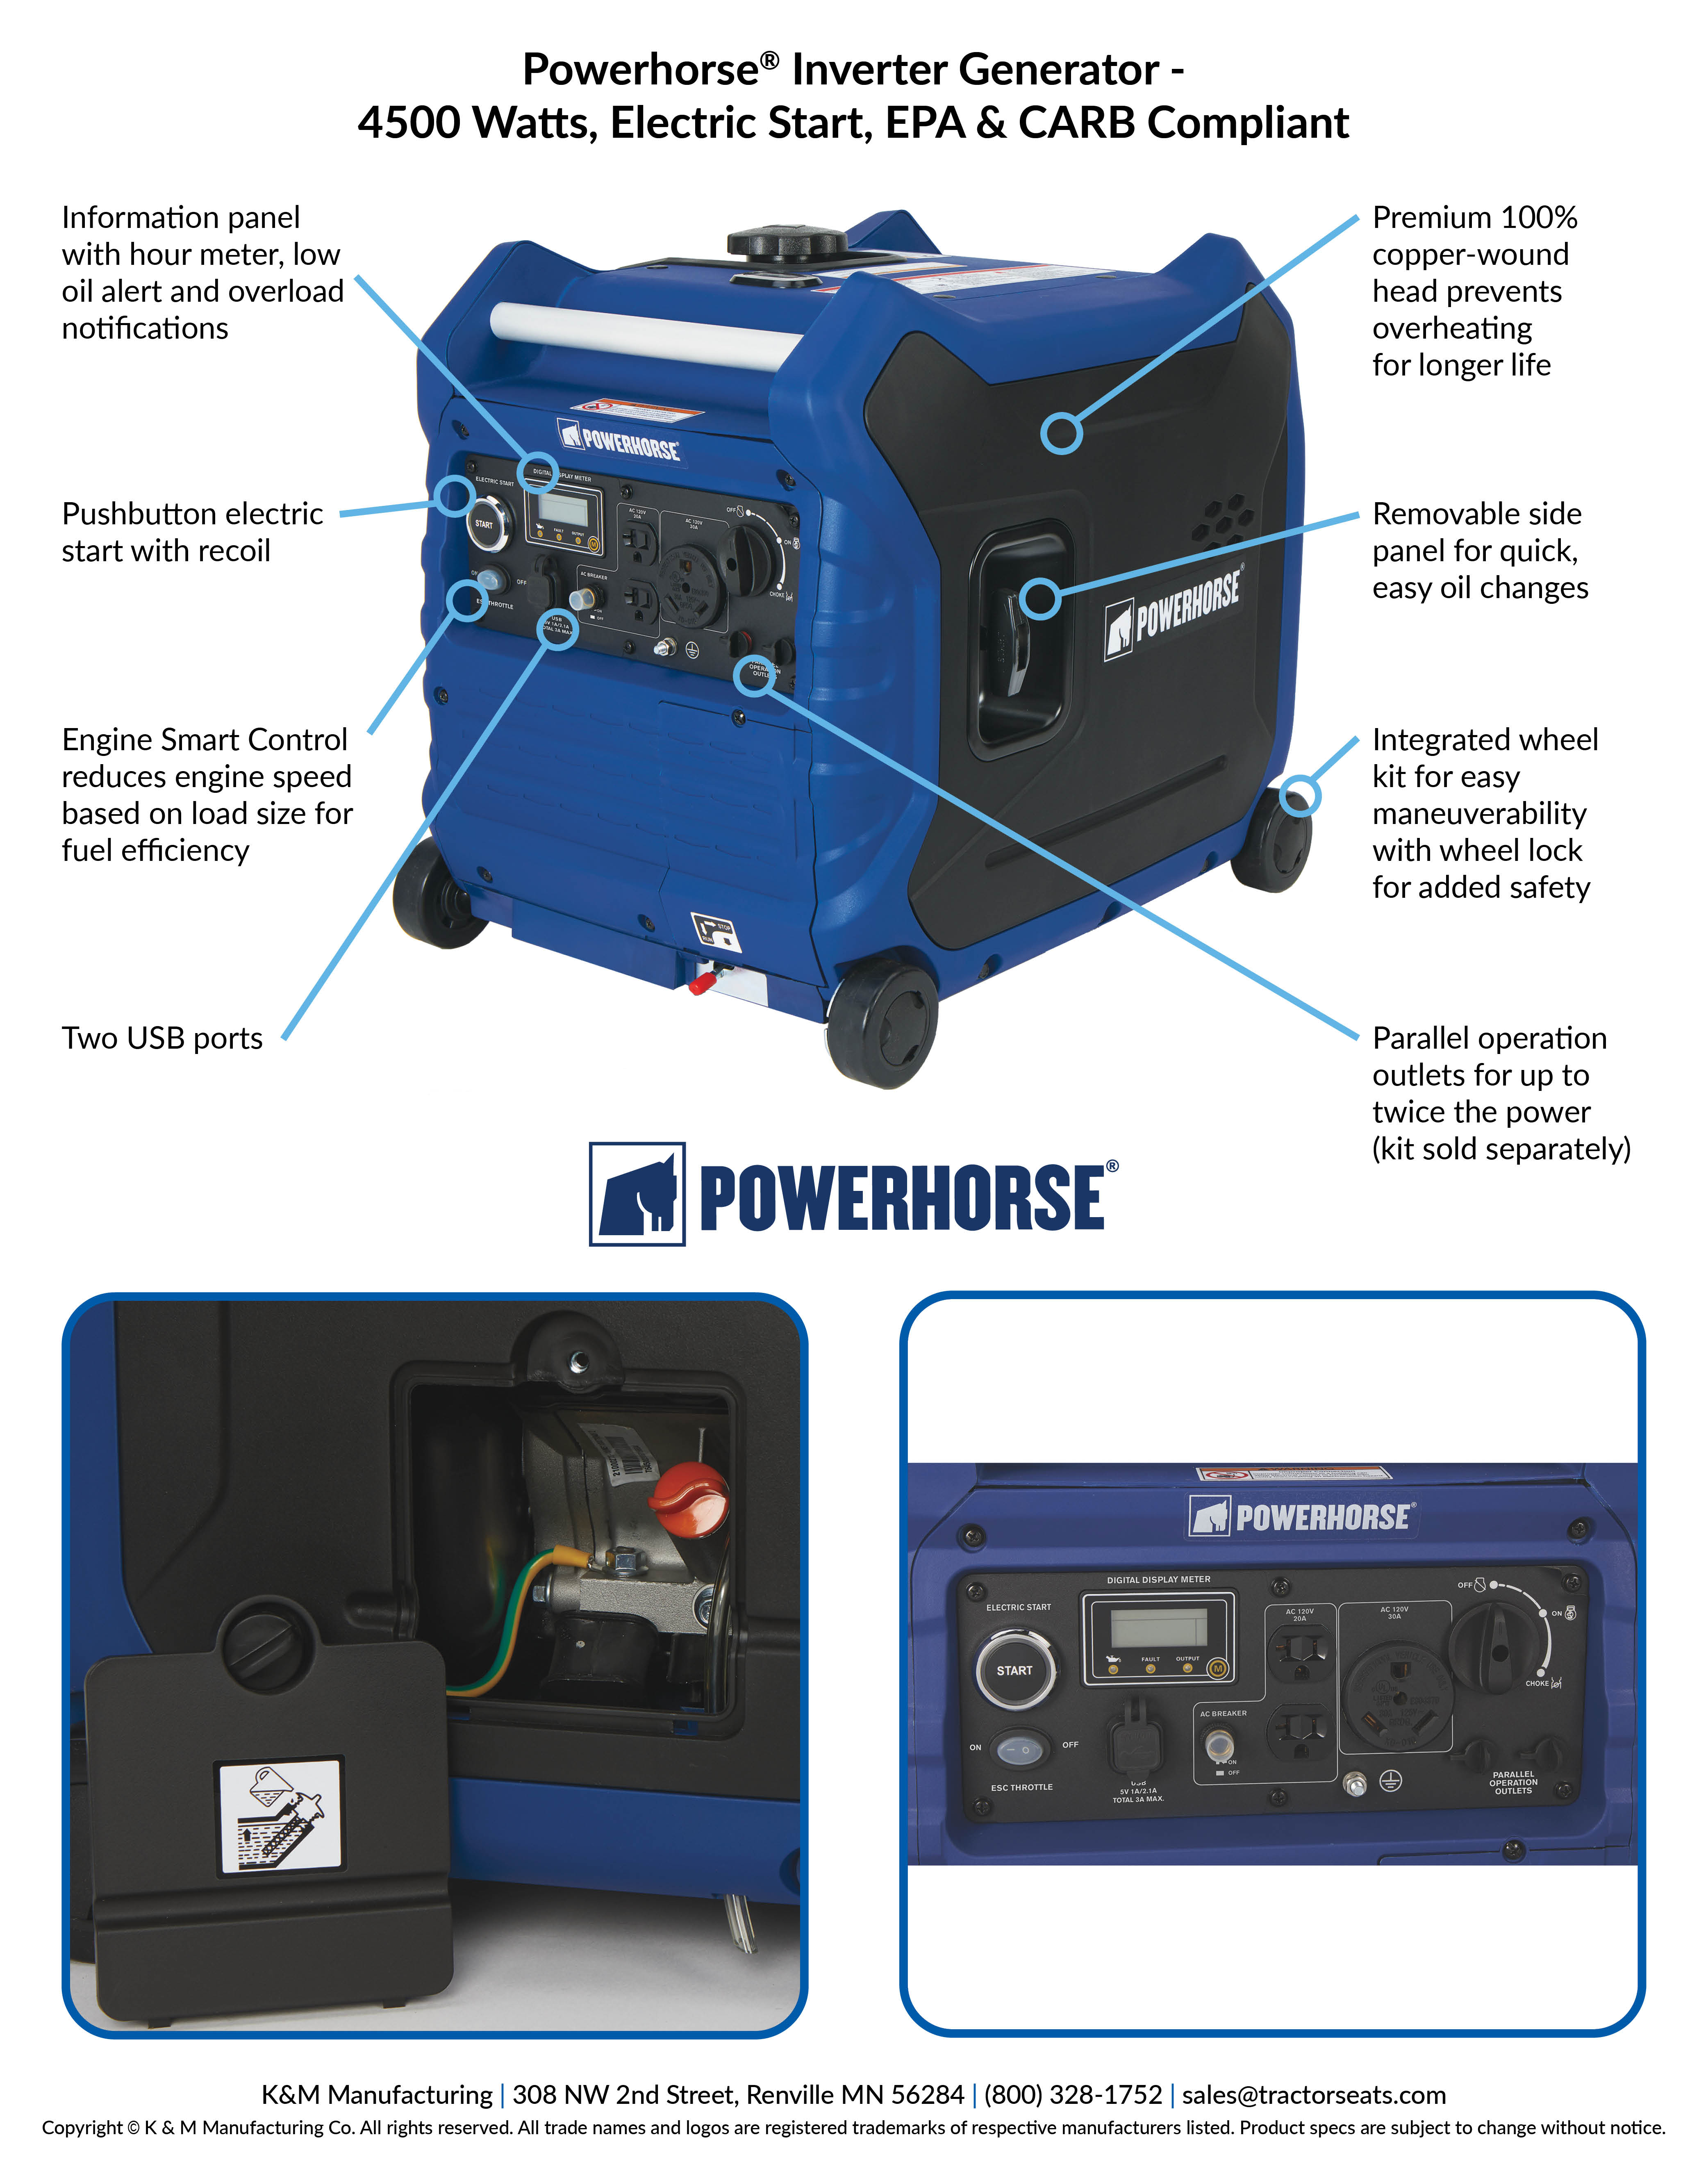 Powerhorse Inverter Generator - 4500 Watts, Electric Start, EPA & CARB Compliant Product Specs Image